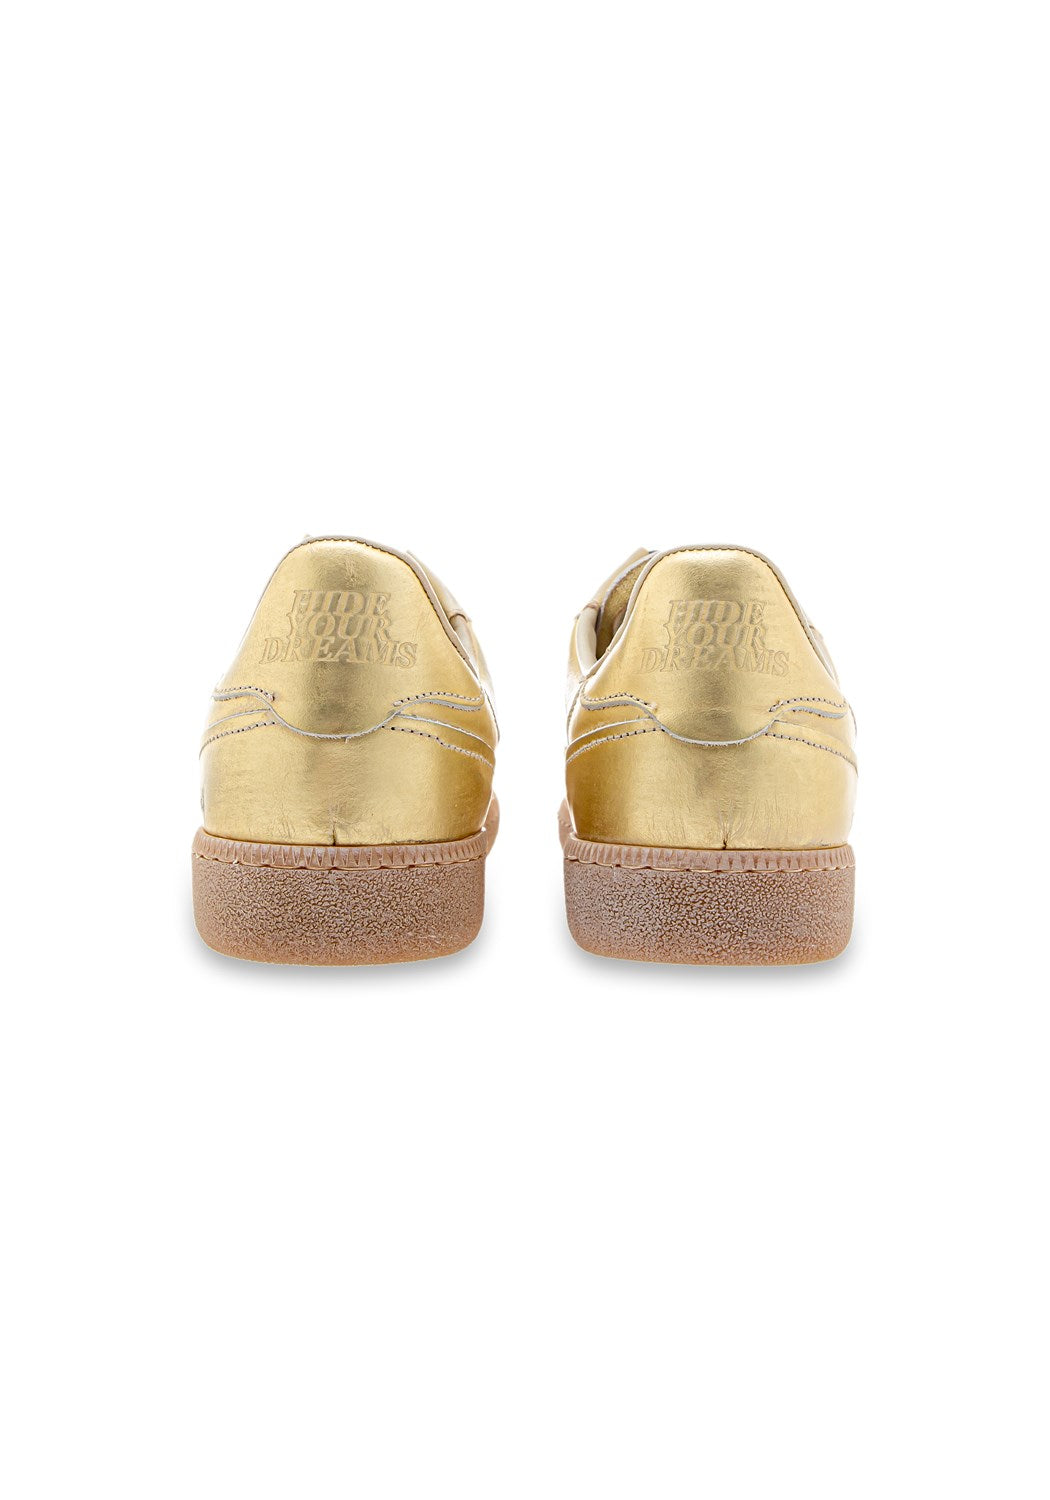 MEGA T W Sneaker HE2WS500 metal gold | Bildmaterial bereitgestellt von SHOES.PLEASE.